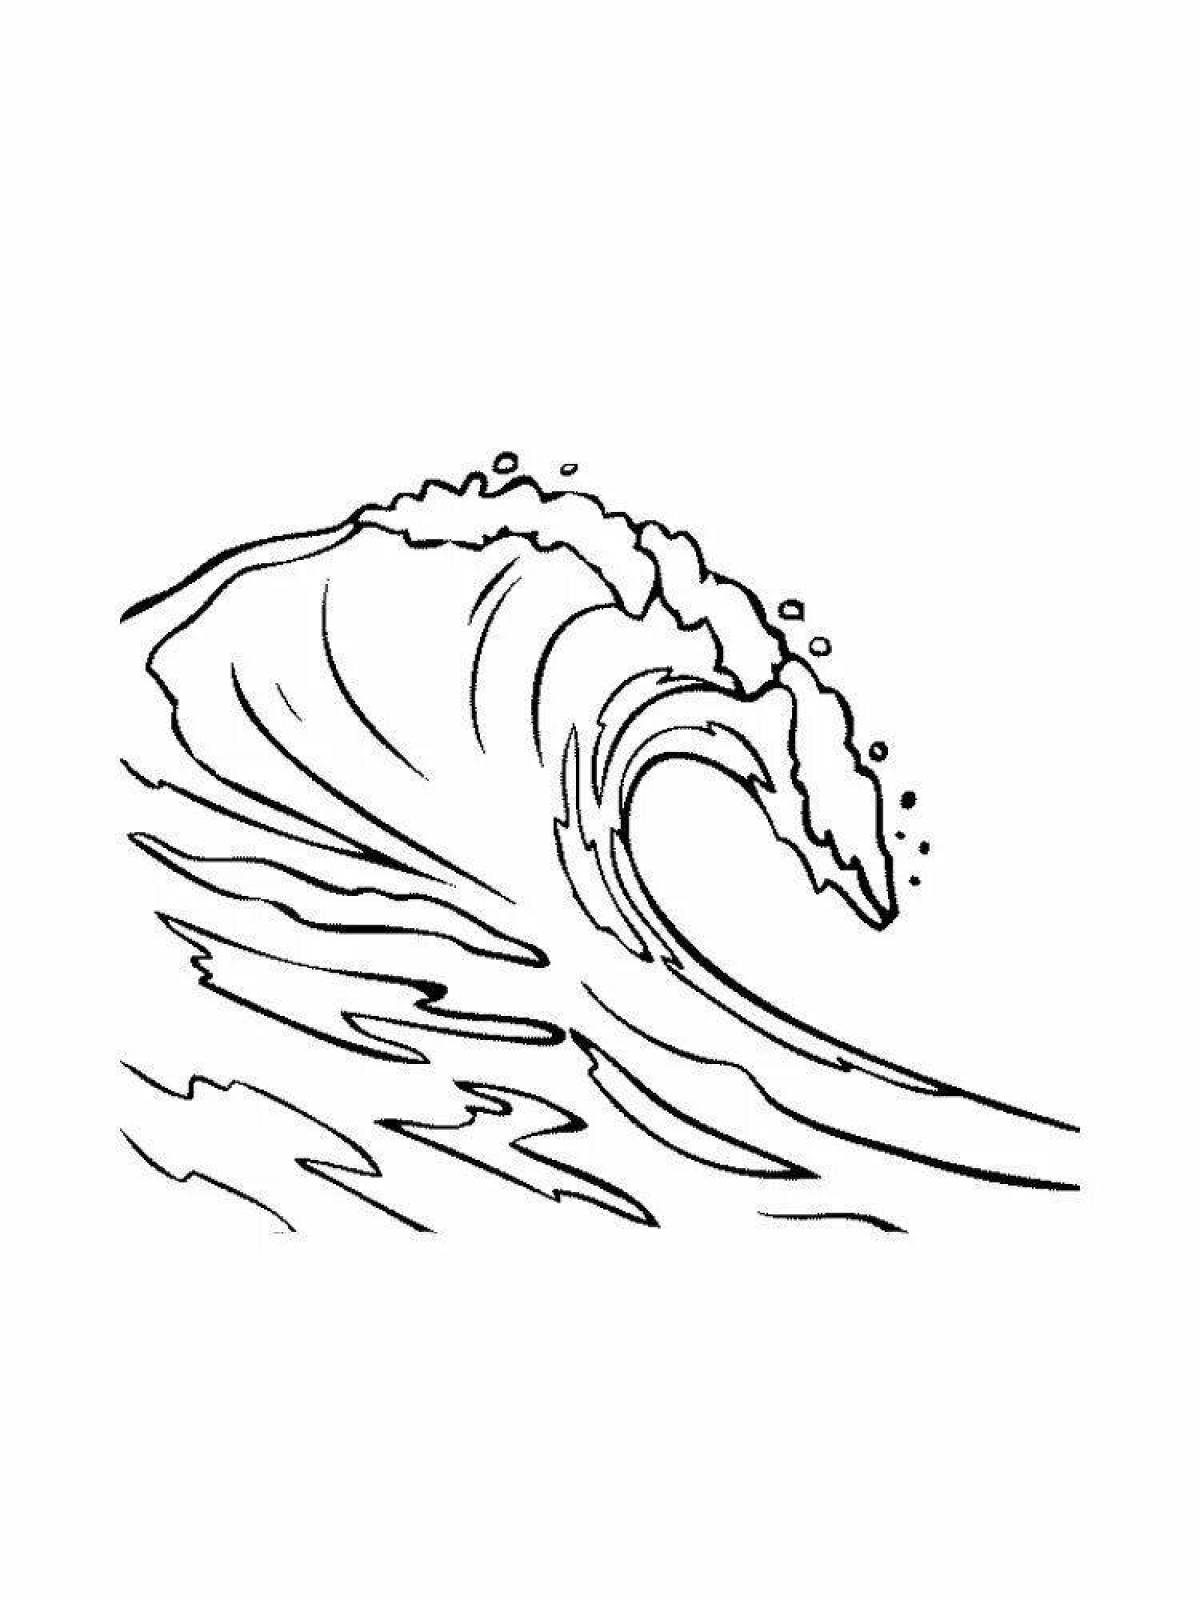 Waves #13